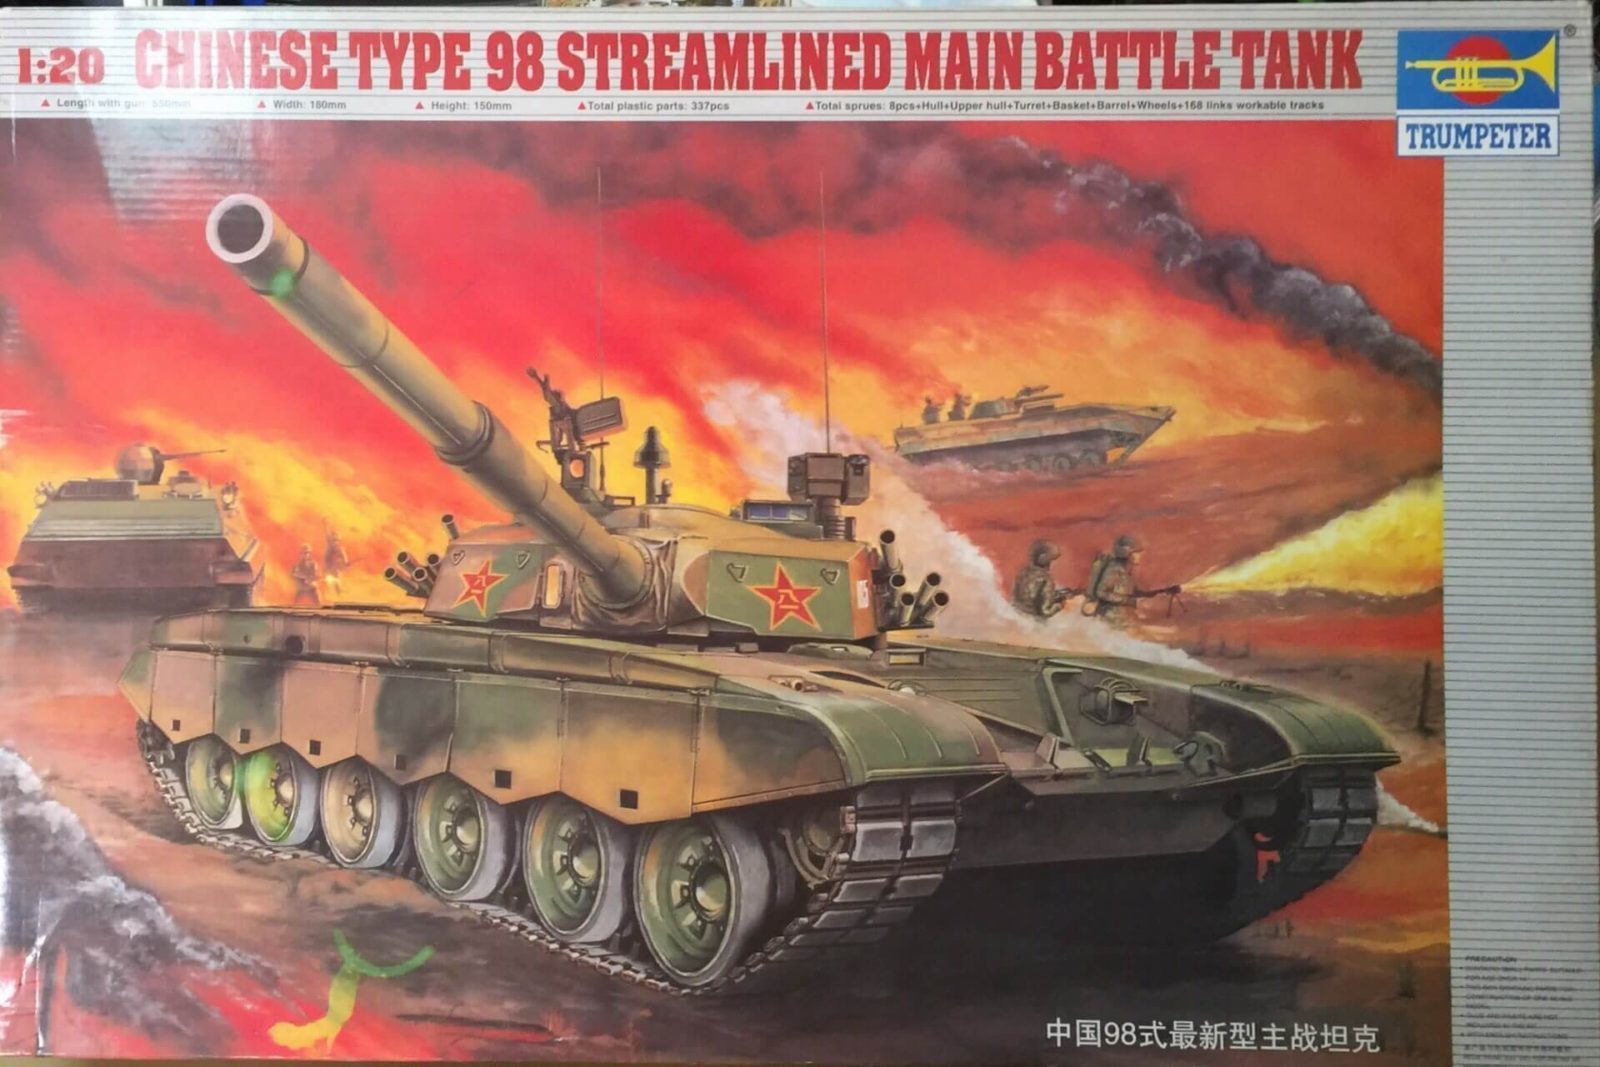 Trumpeter Chinese Type 98 Streamlined Main Battle Tank Ref 00901 Escala 1:20